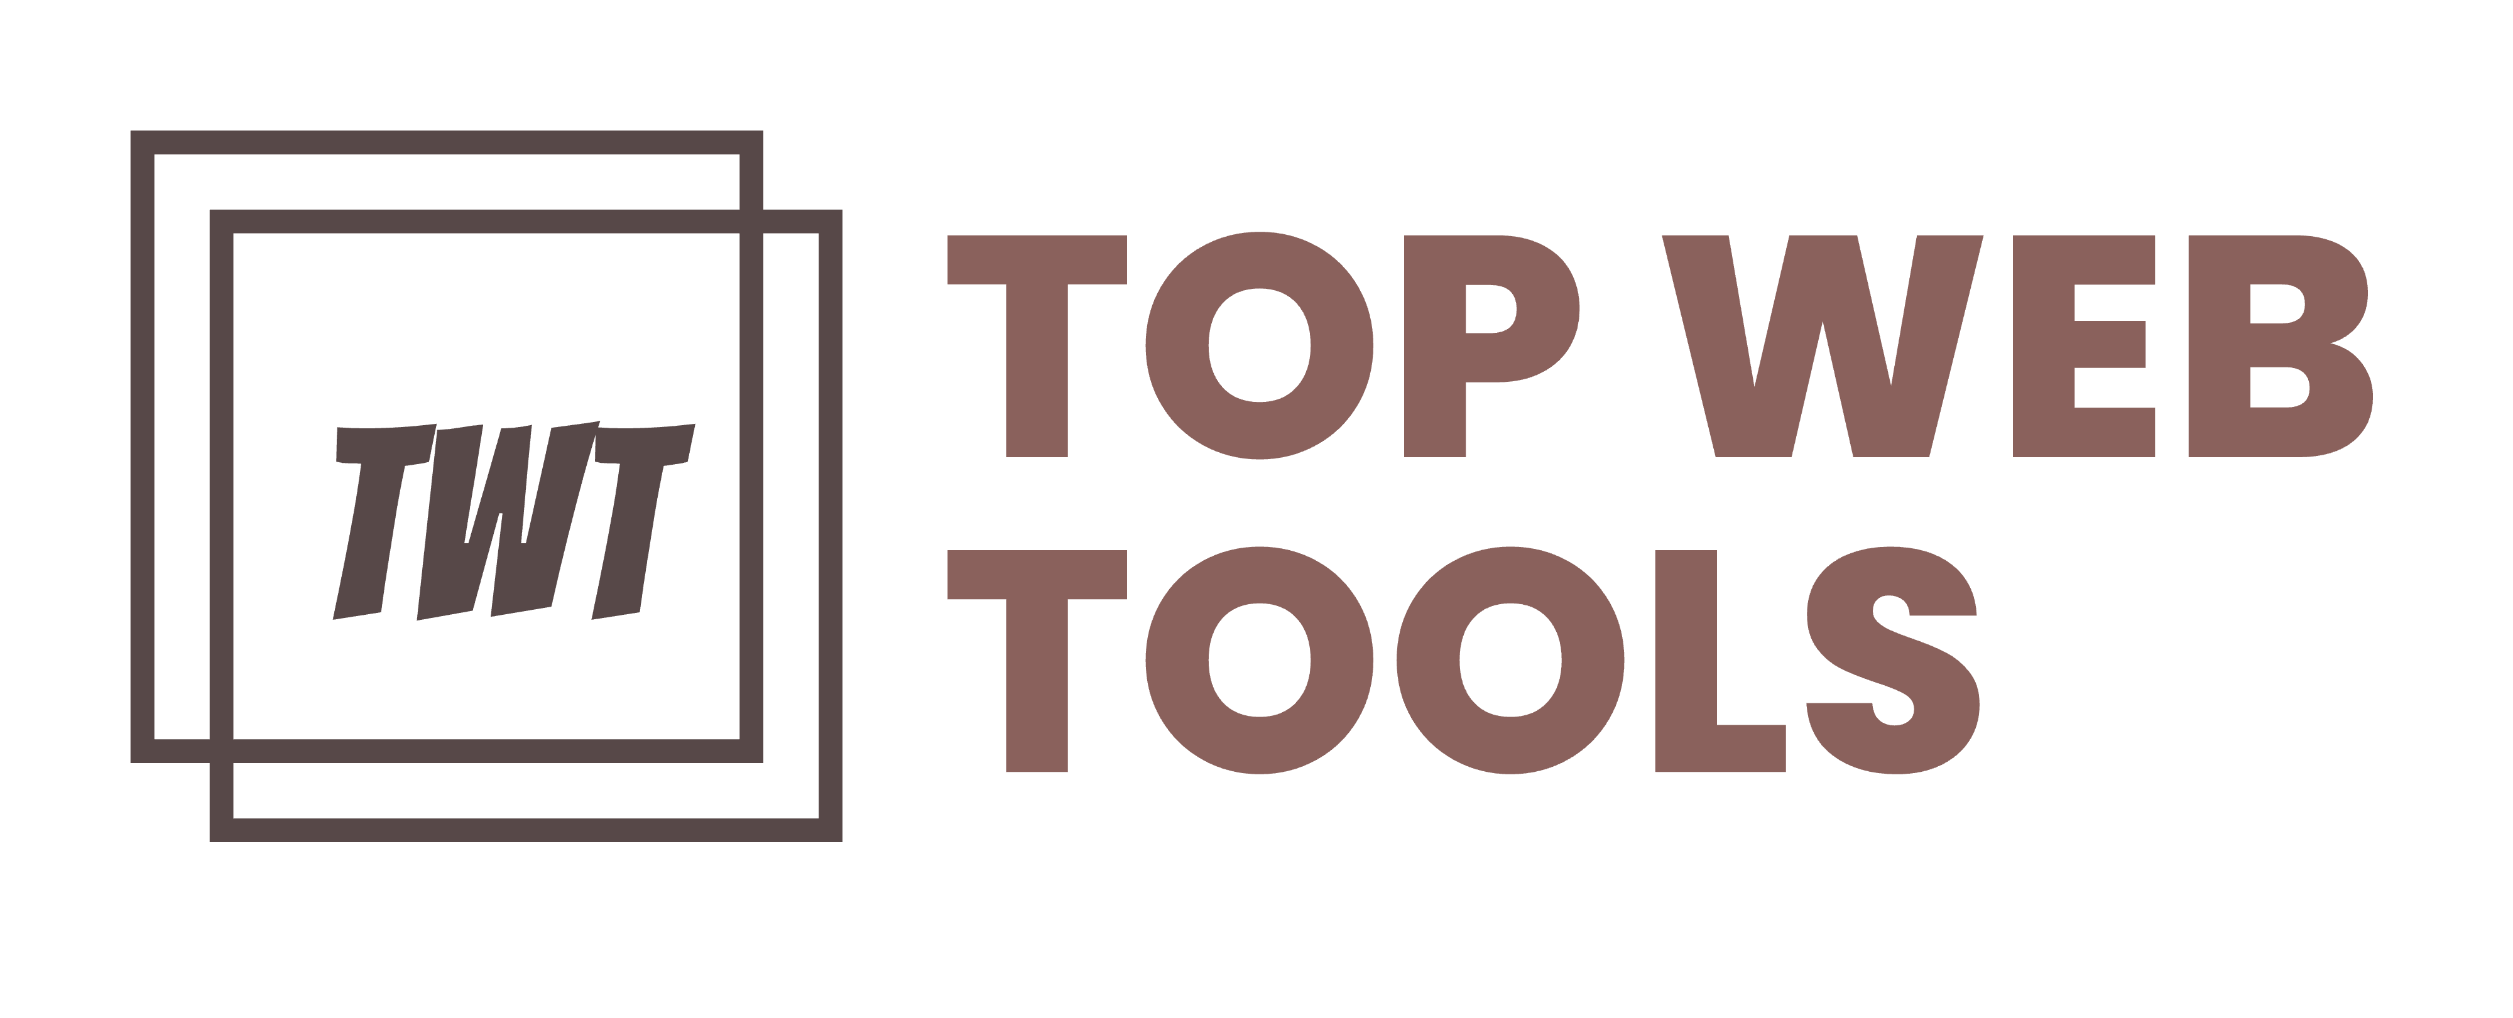 Topweb tools logo